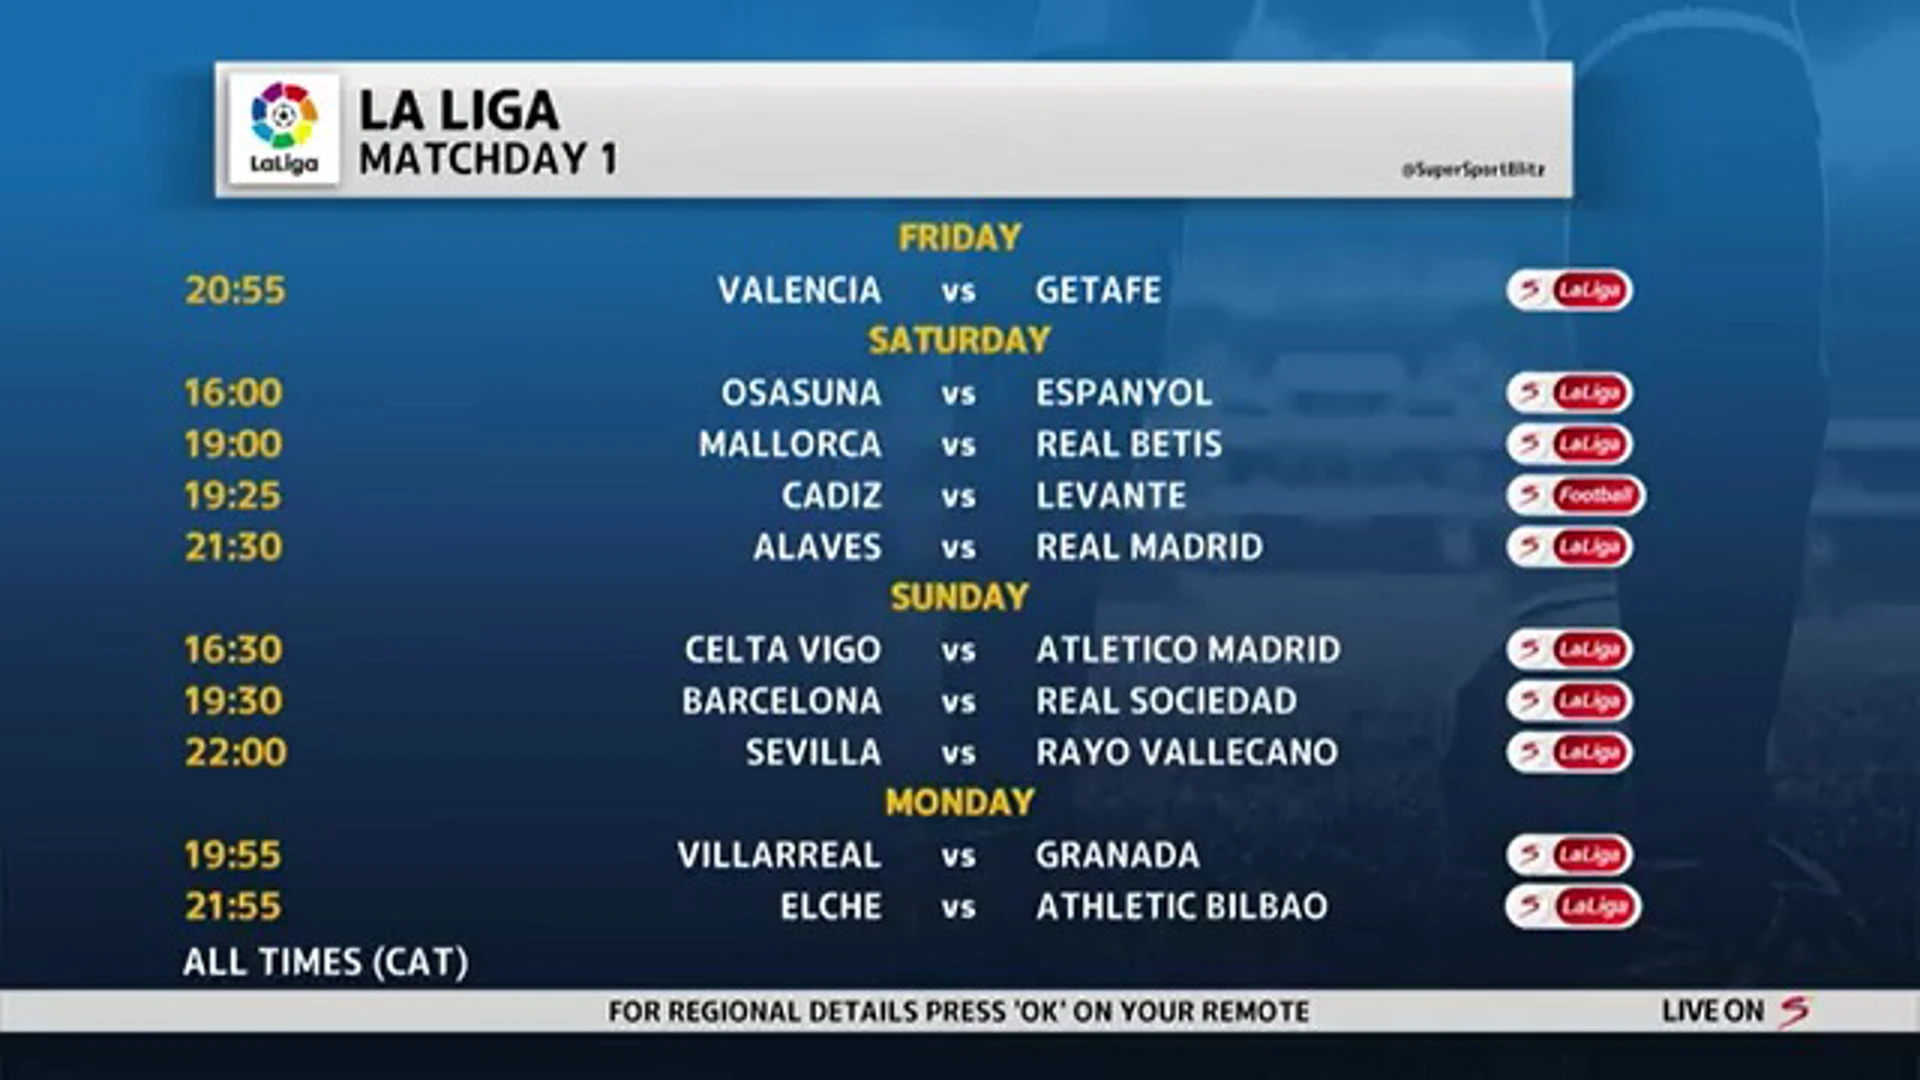 La Liga | MatchDay 1 fixtures